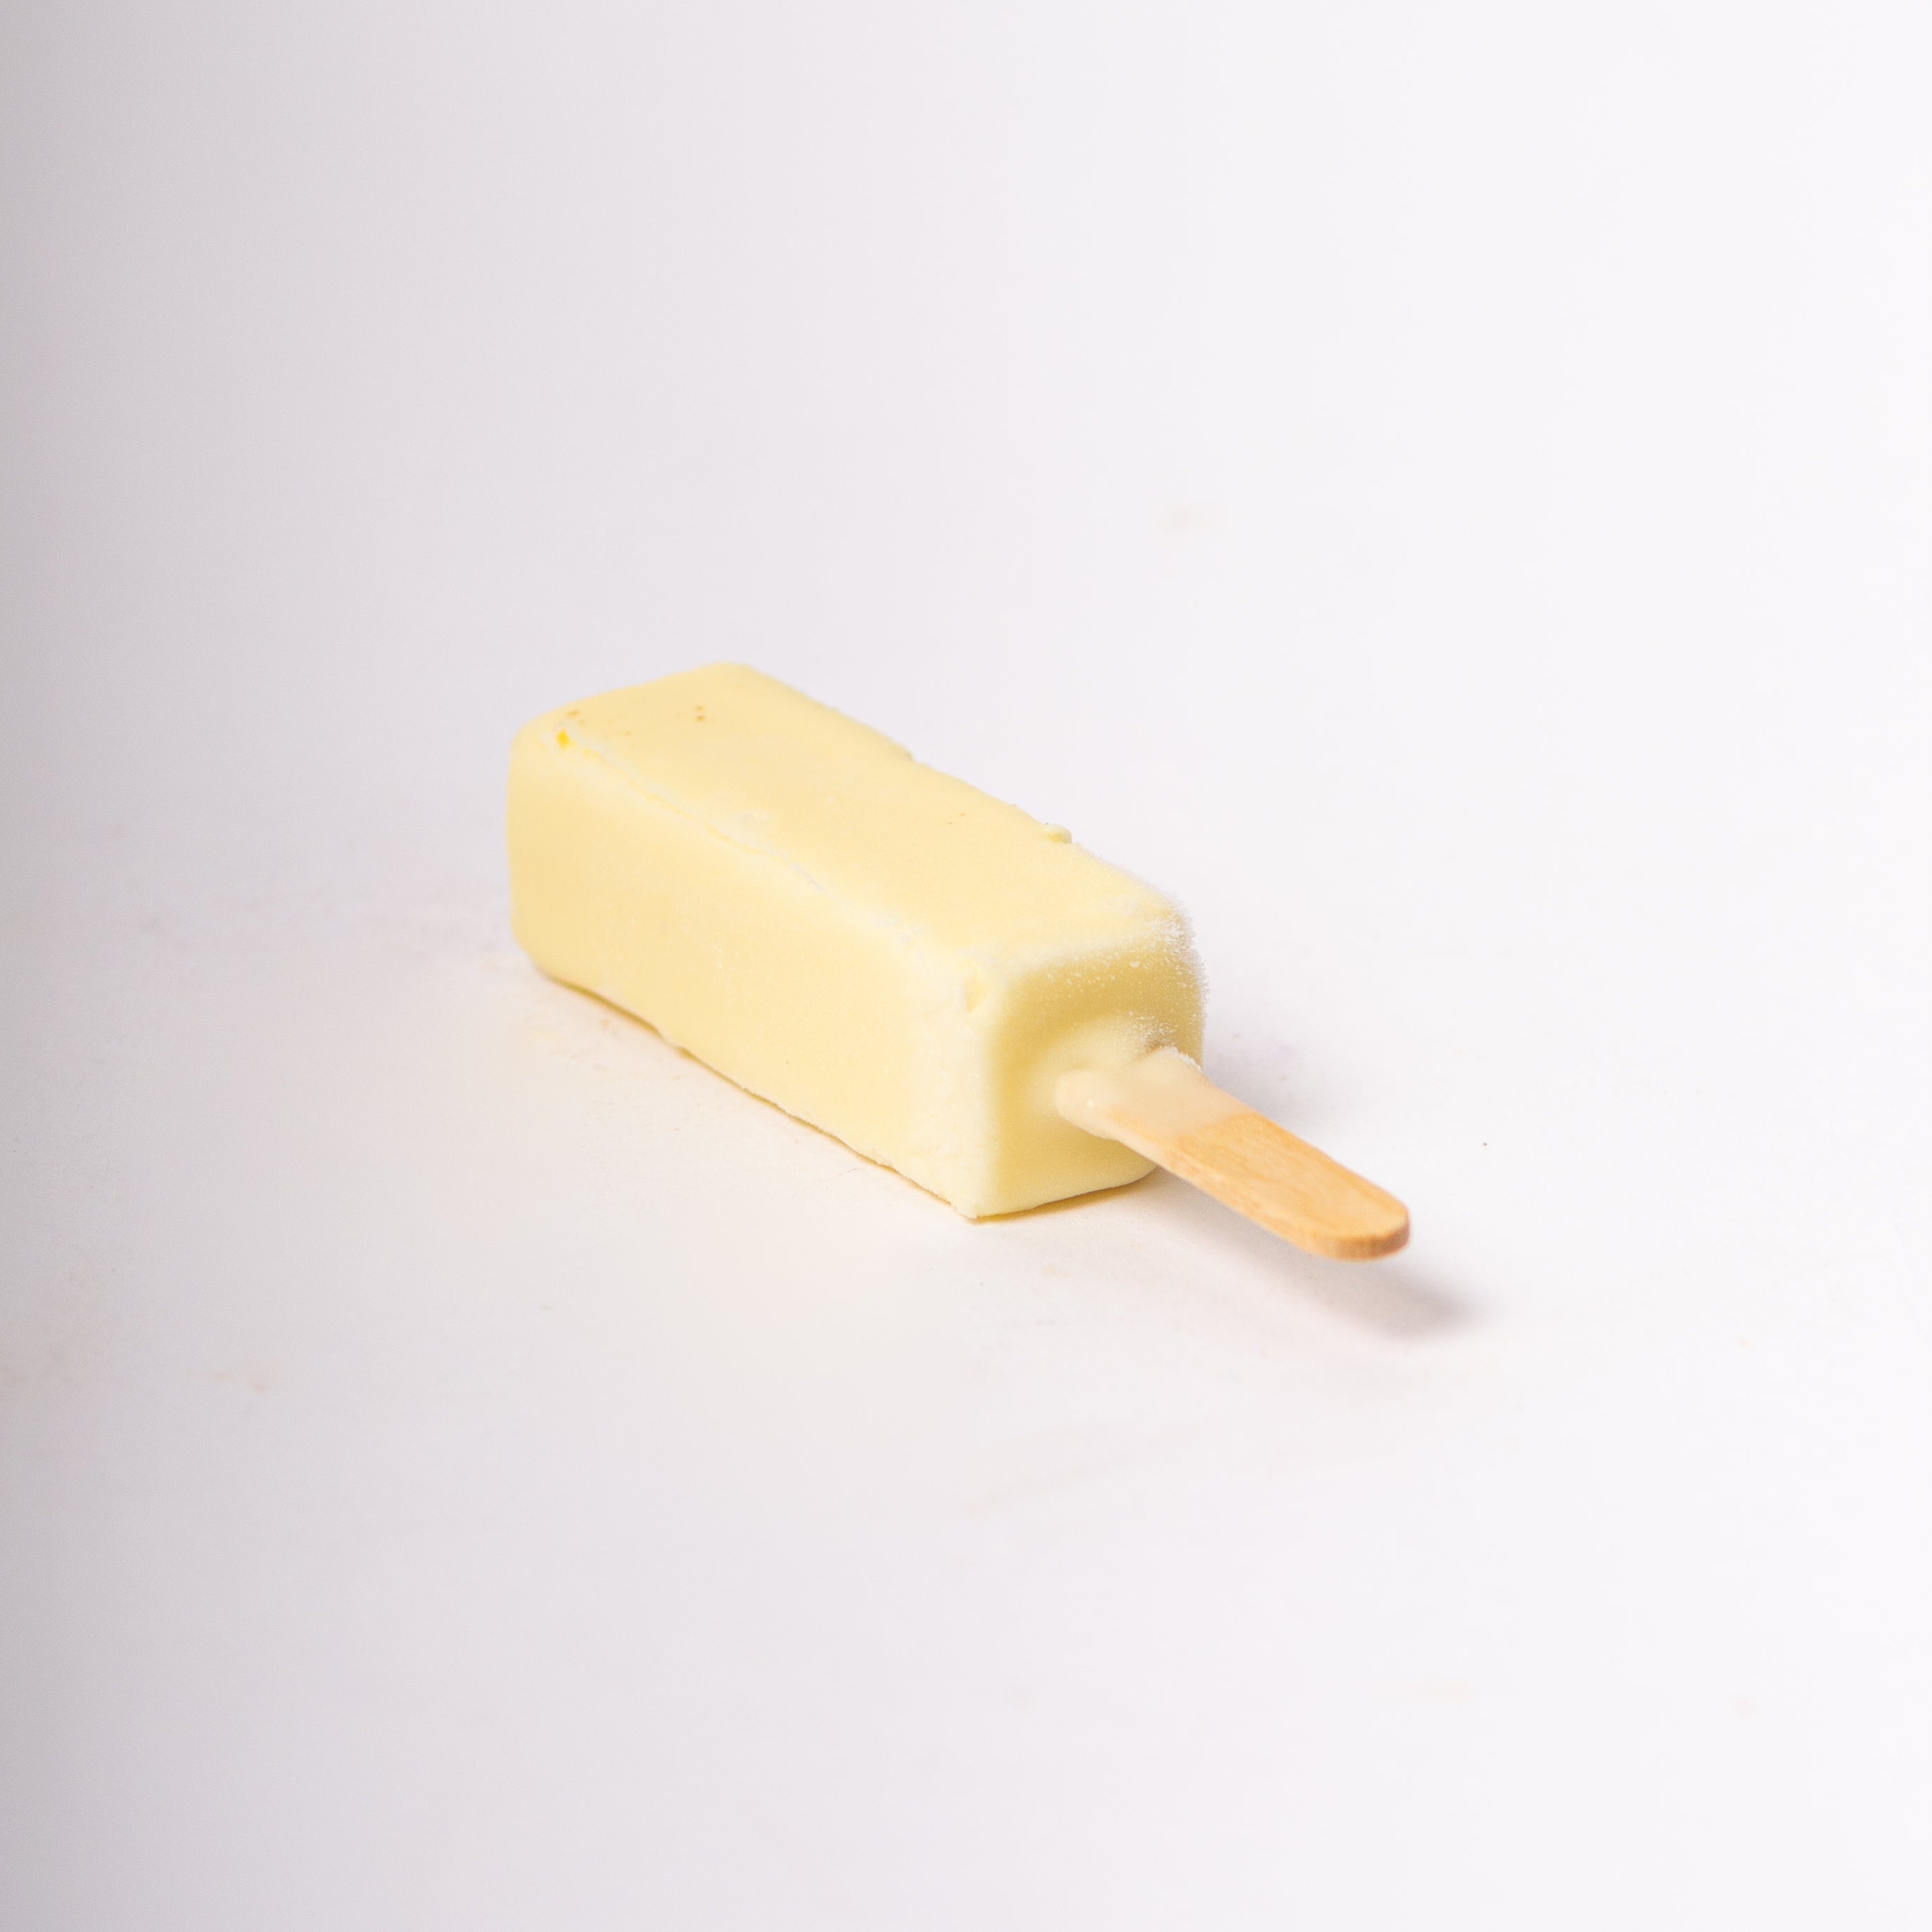 Mini frisco vanille omhuld met witte chocolade 12st.